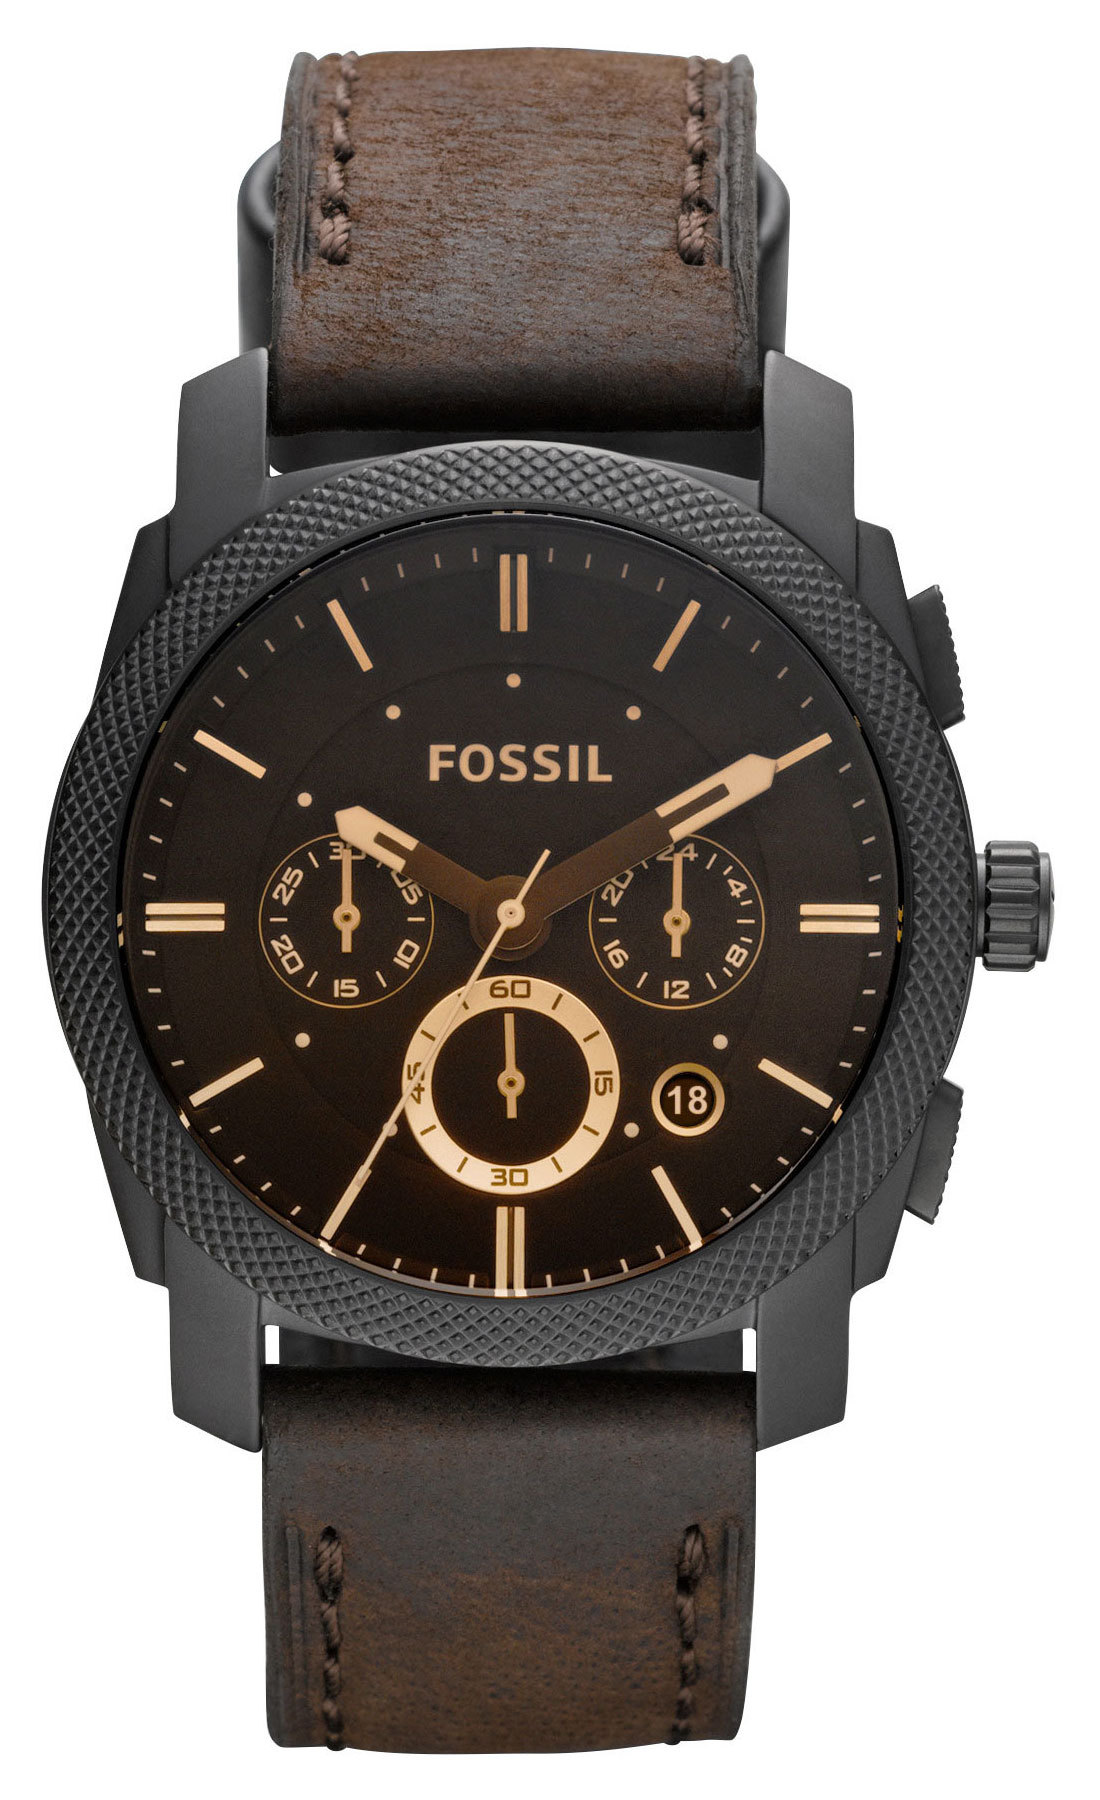 Fossil FS4656 - мужские наручные часы из коллекции Fashion